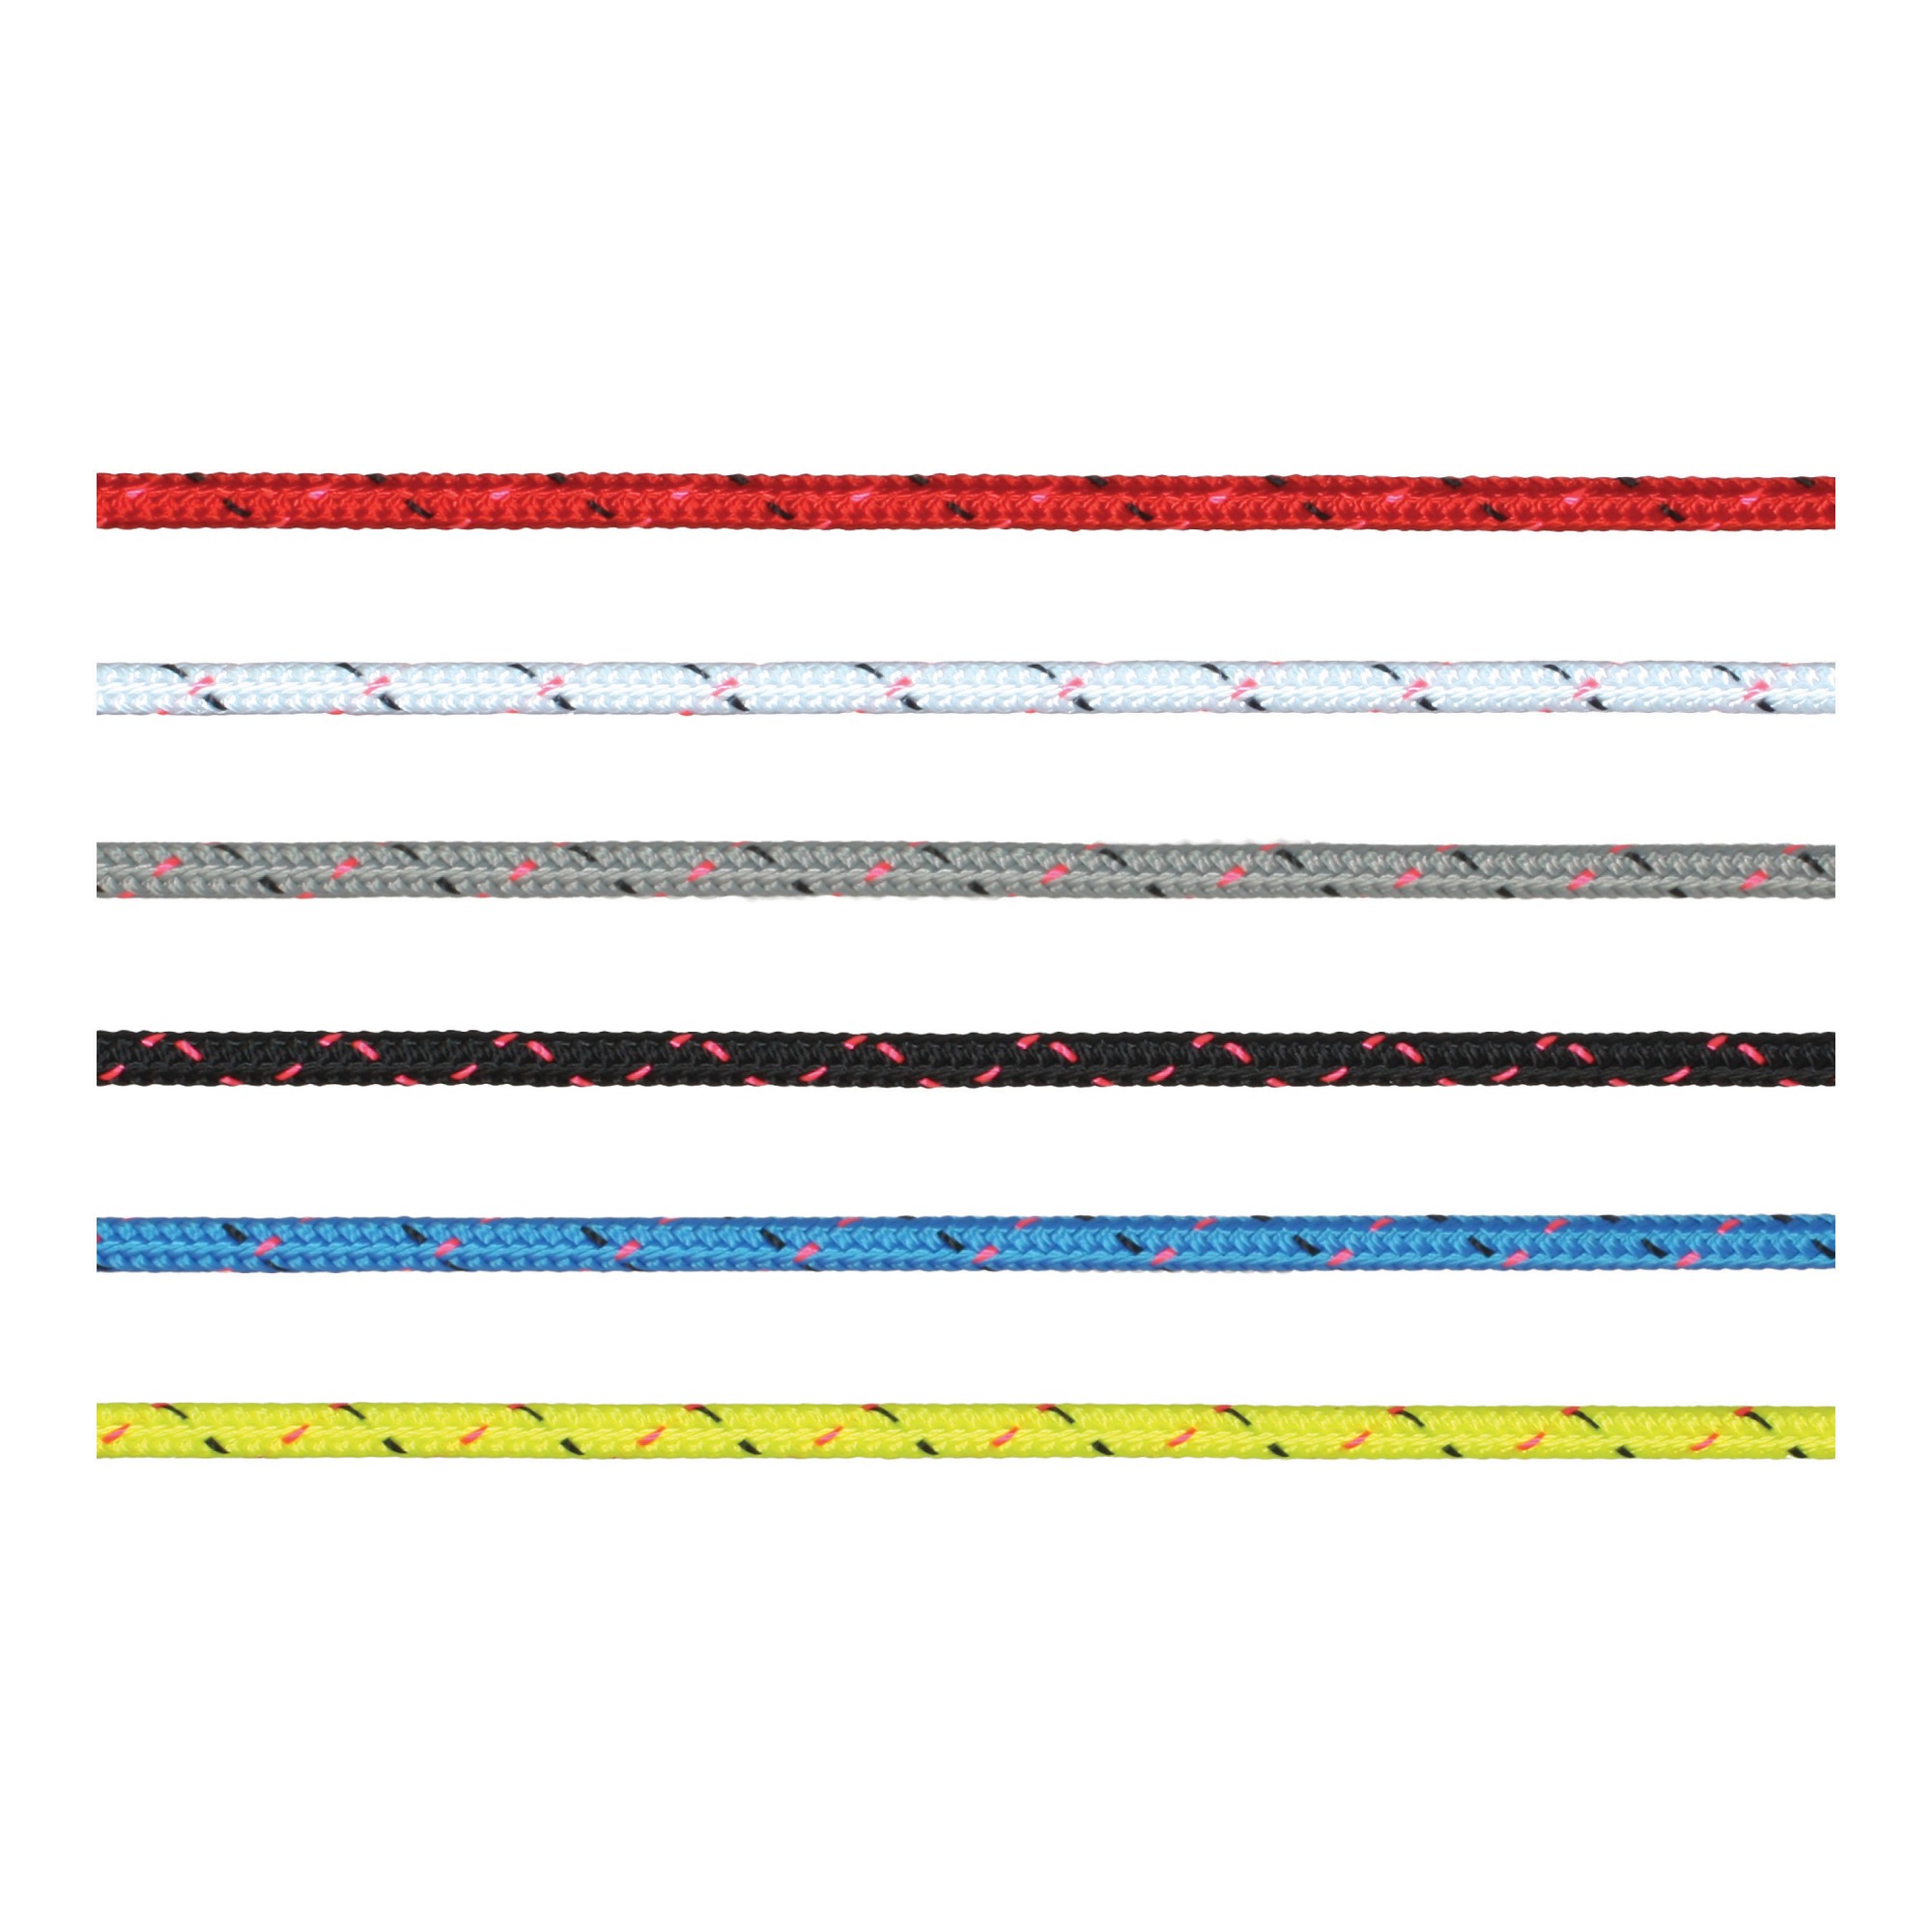 Трос MARLOW Excel Pro из полиэстера цвета лайм 200 м диаметр 5 мм, Osculati 06.465.05LI